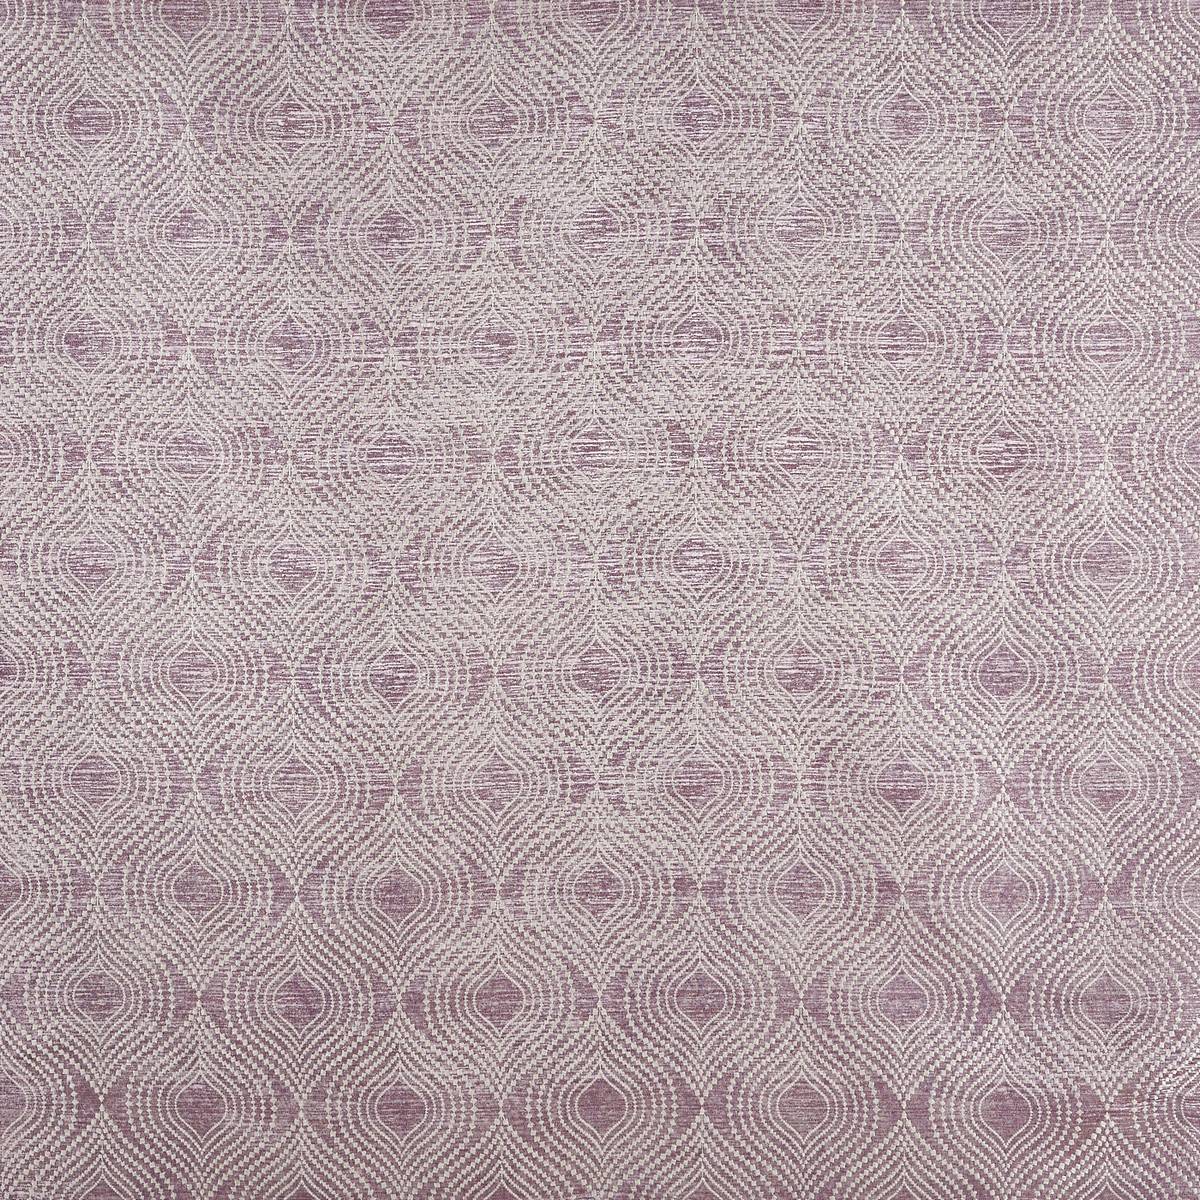 Radiance Dusk Fabric by Prestigious Textiles